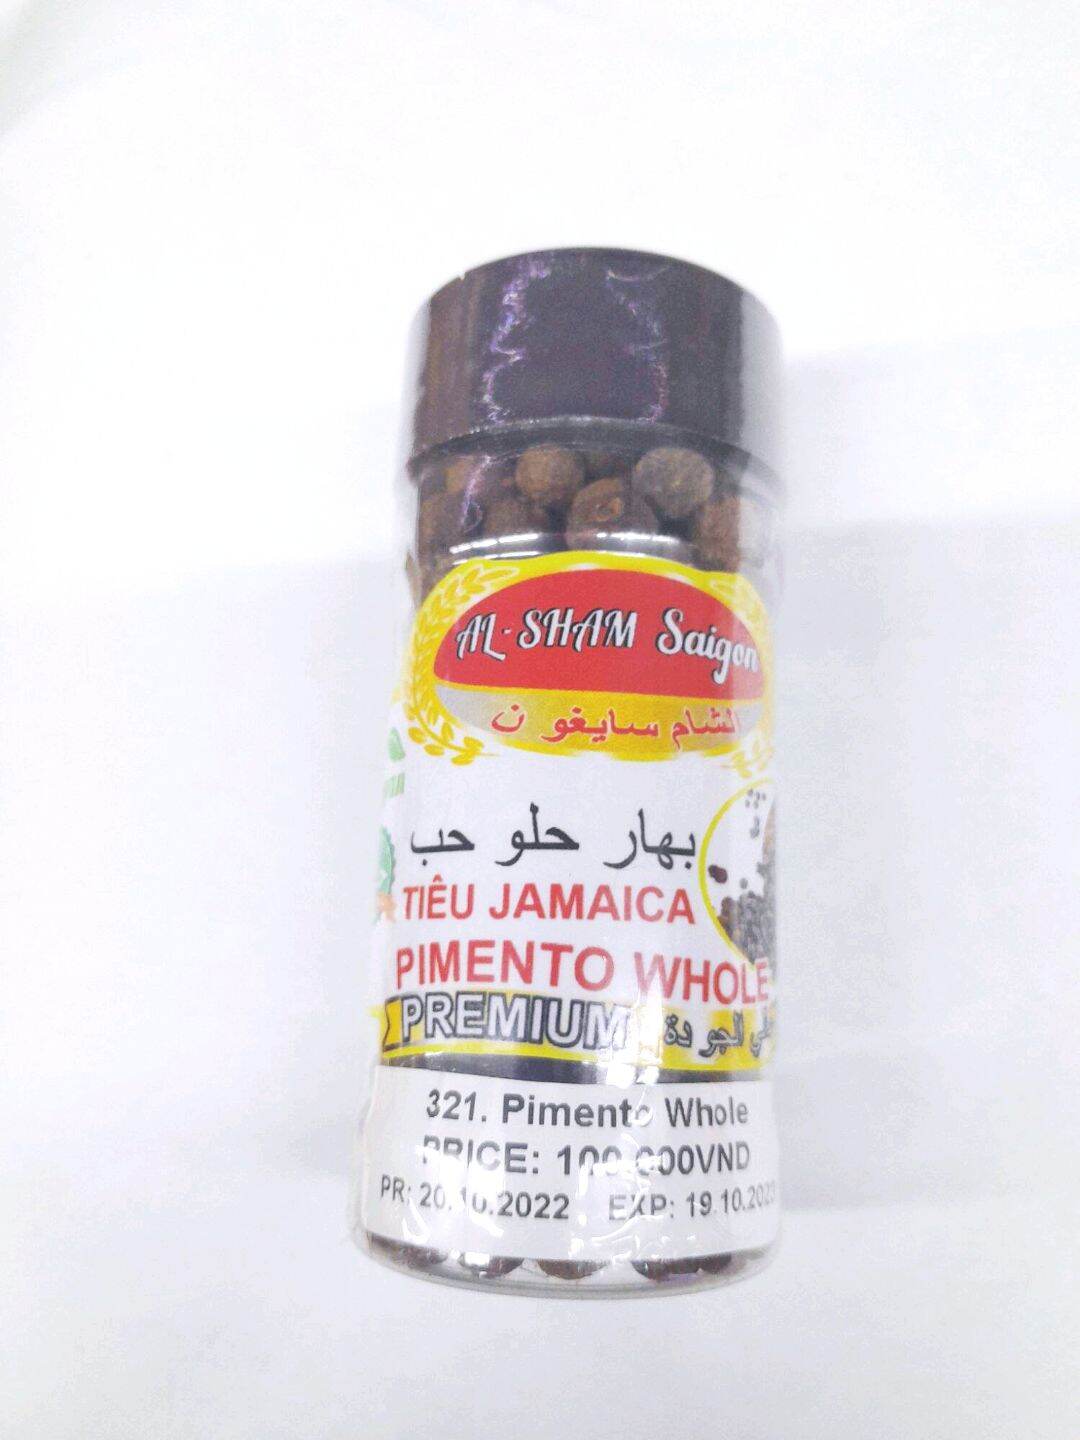 Pimento Whole  Tiêu Jamaica